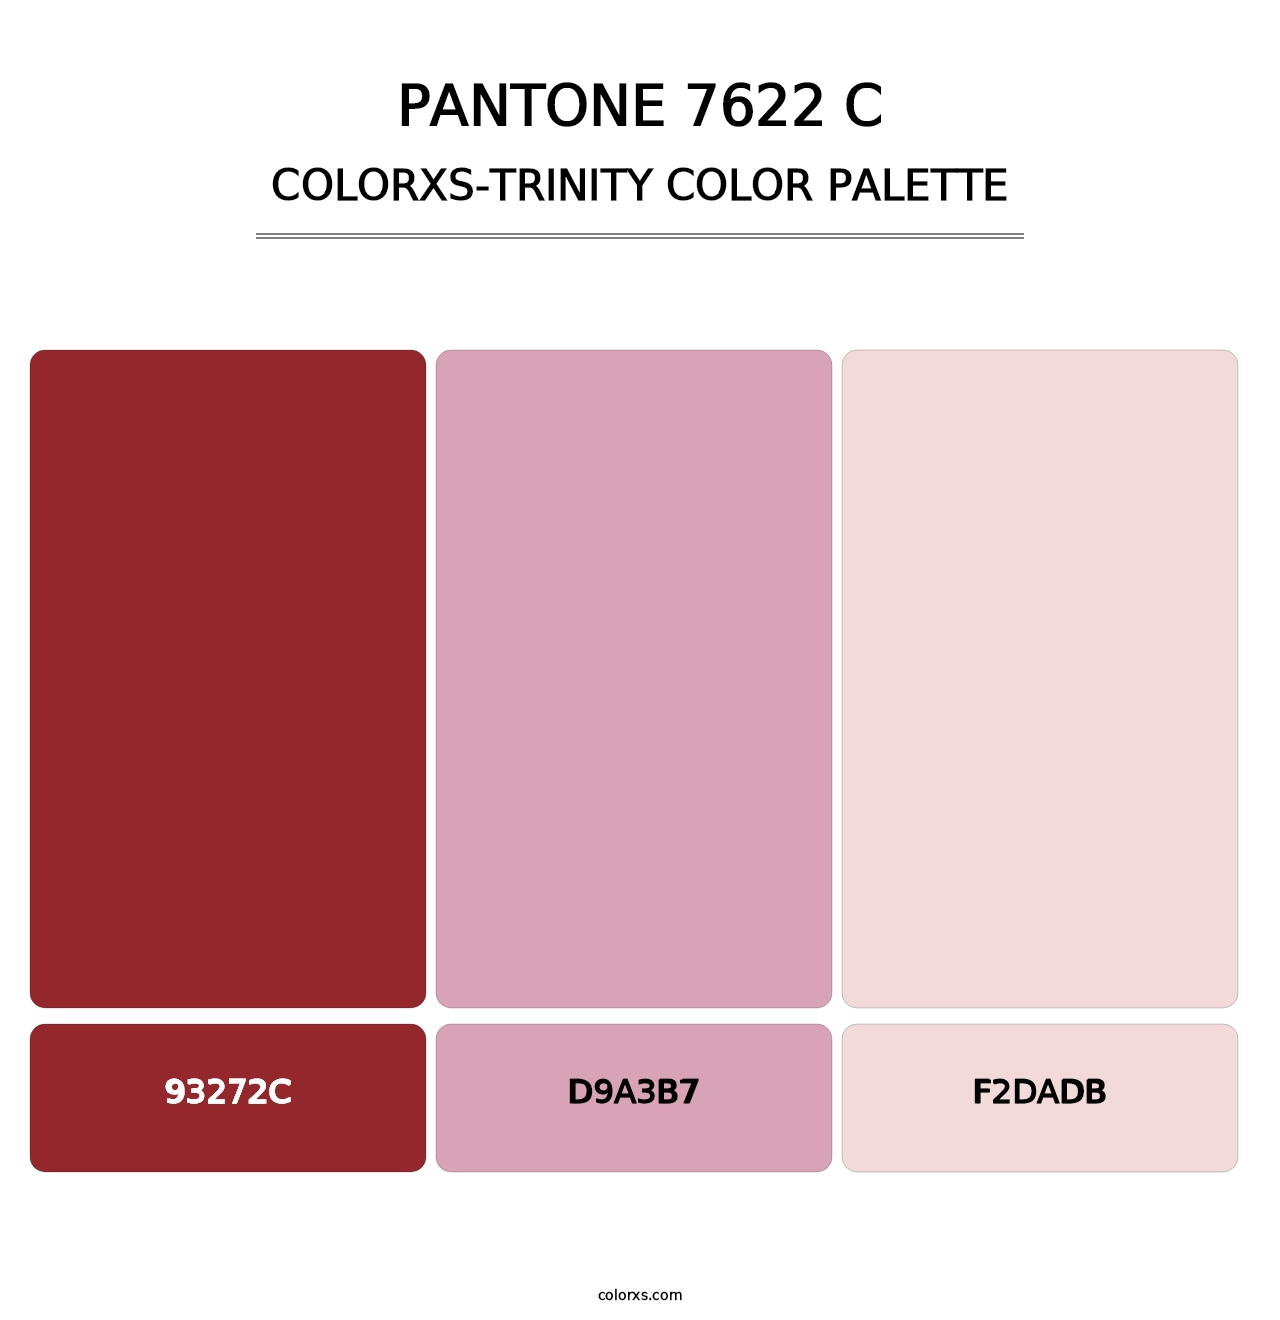 PANTONE 7622 C - Colorxs Trinity Palette